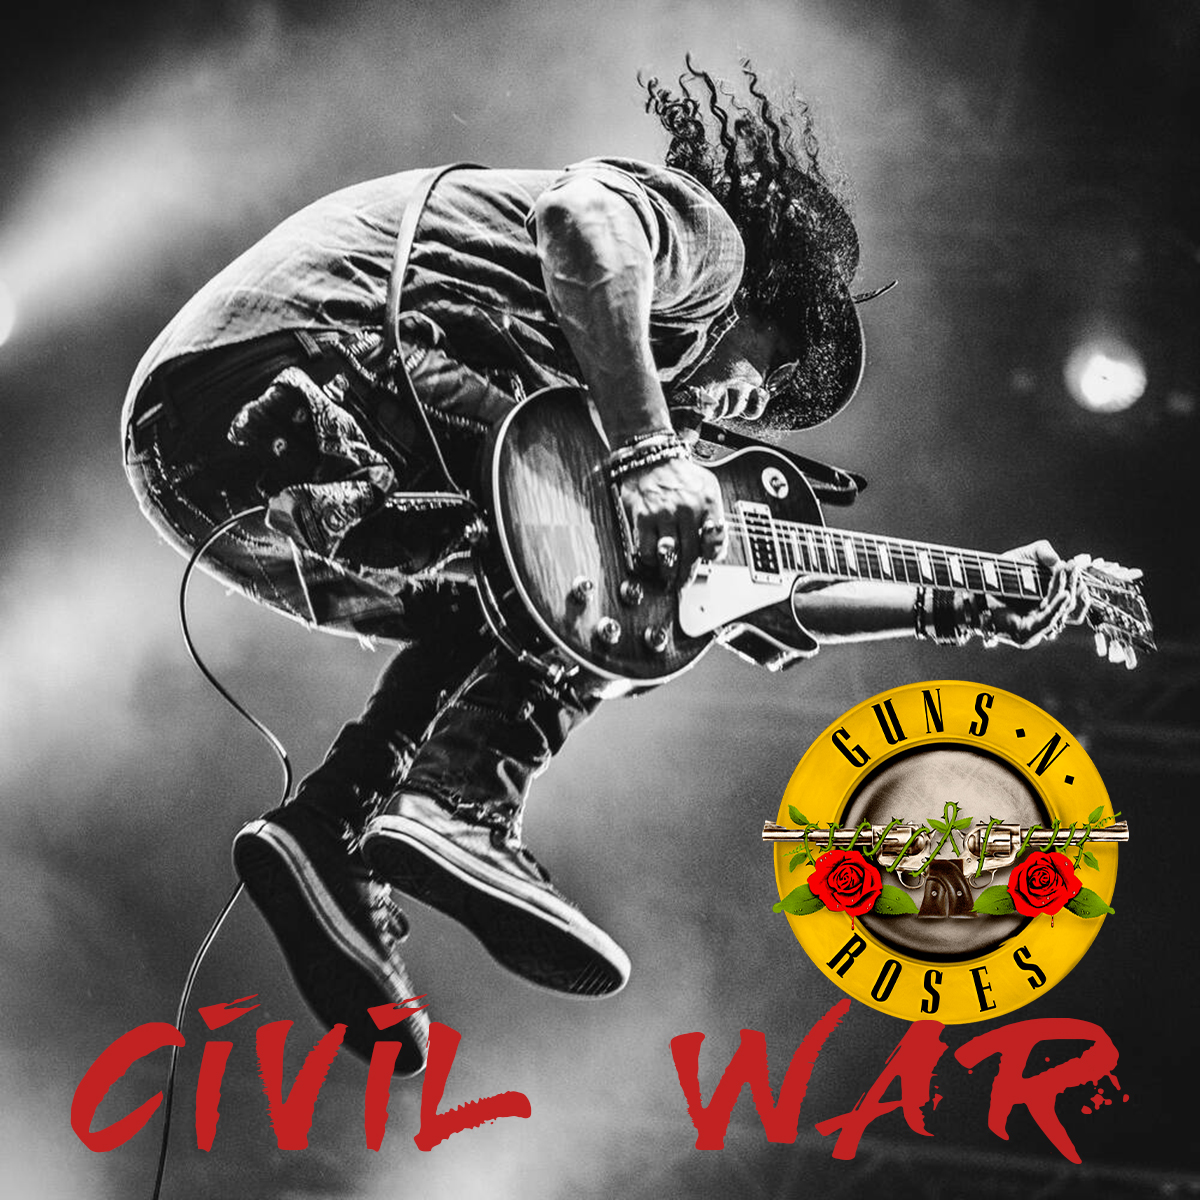 Guns N' Roses - Civil War电吉他教学慢速视频演示Hi-Res音频 谱